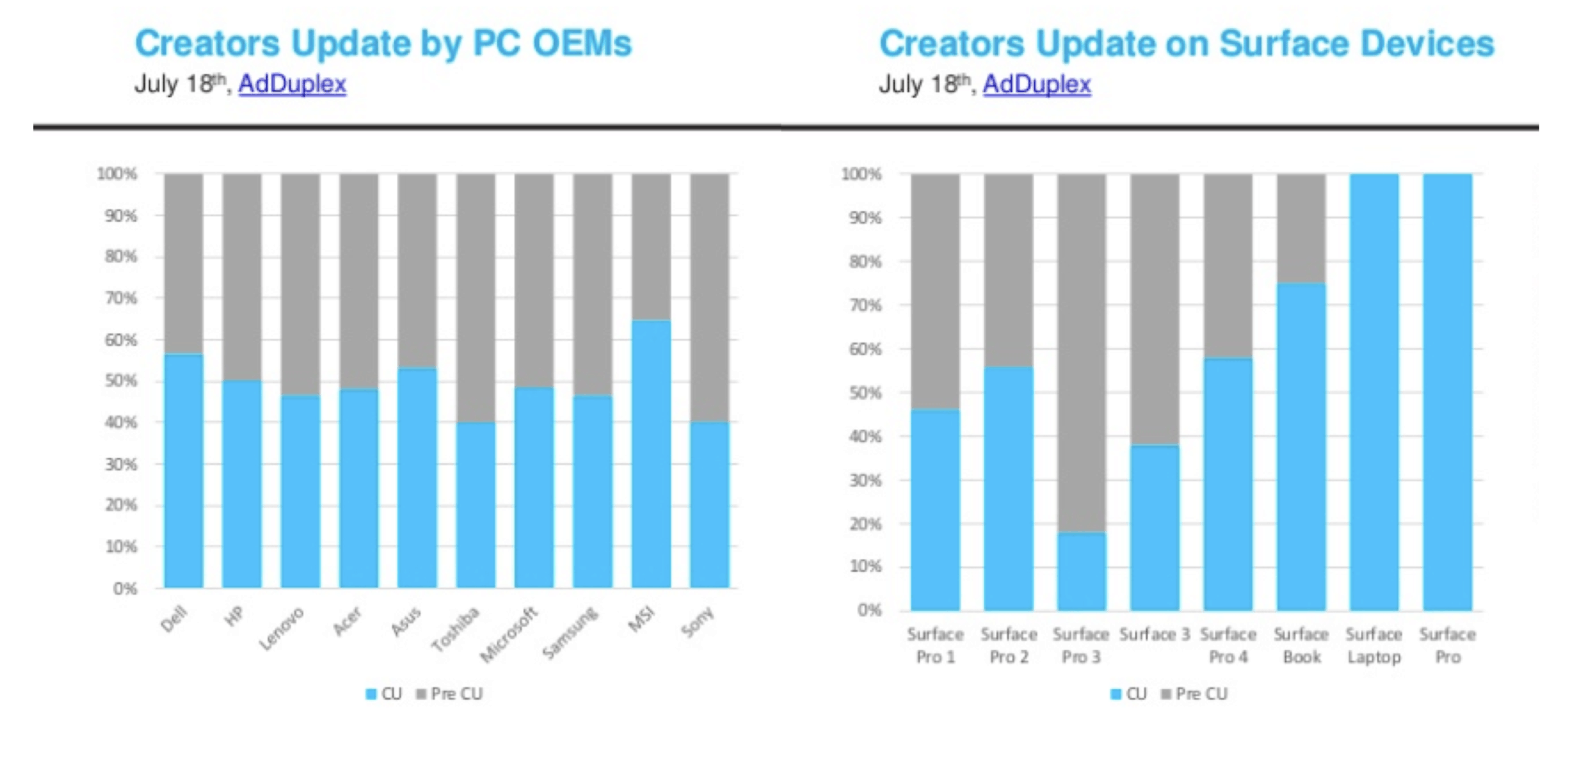 AdDuplex: Windows 10 Creators Update now has a 50% install base - OnMSFT.com - July 19, 2017